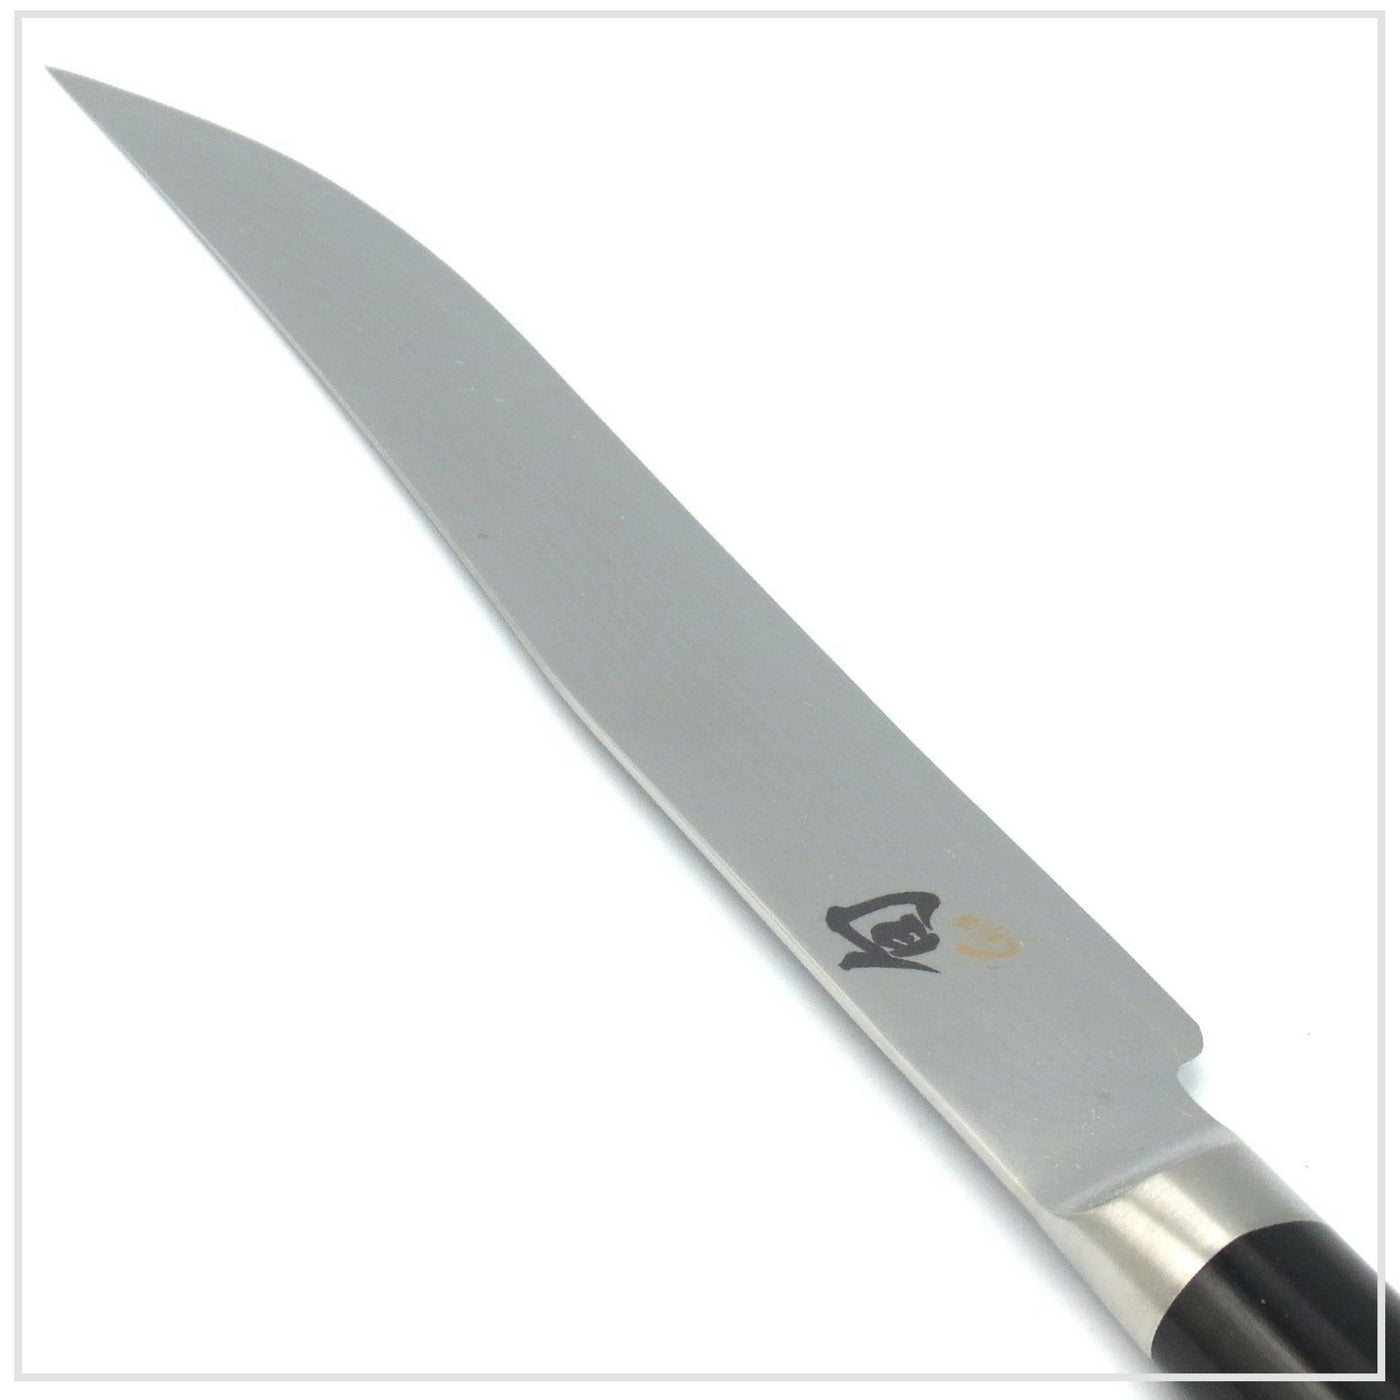 KAI SHUN Carving Knife